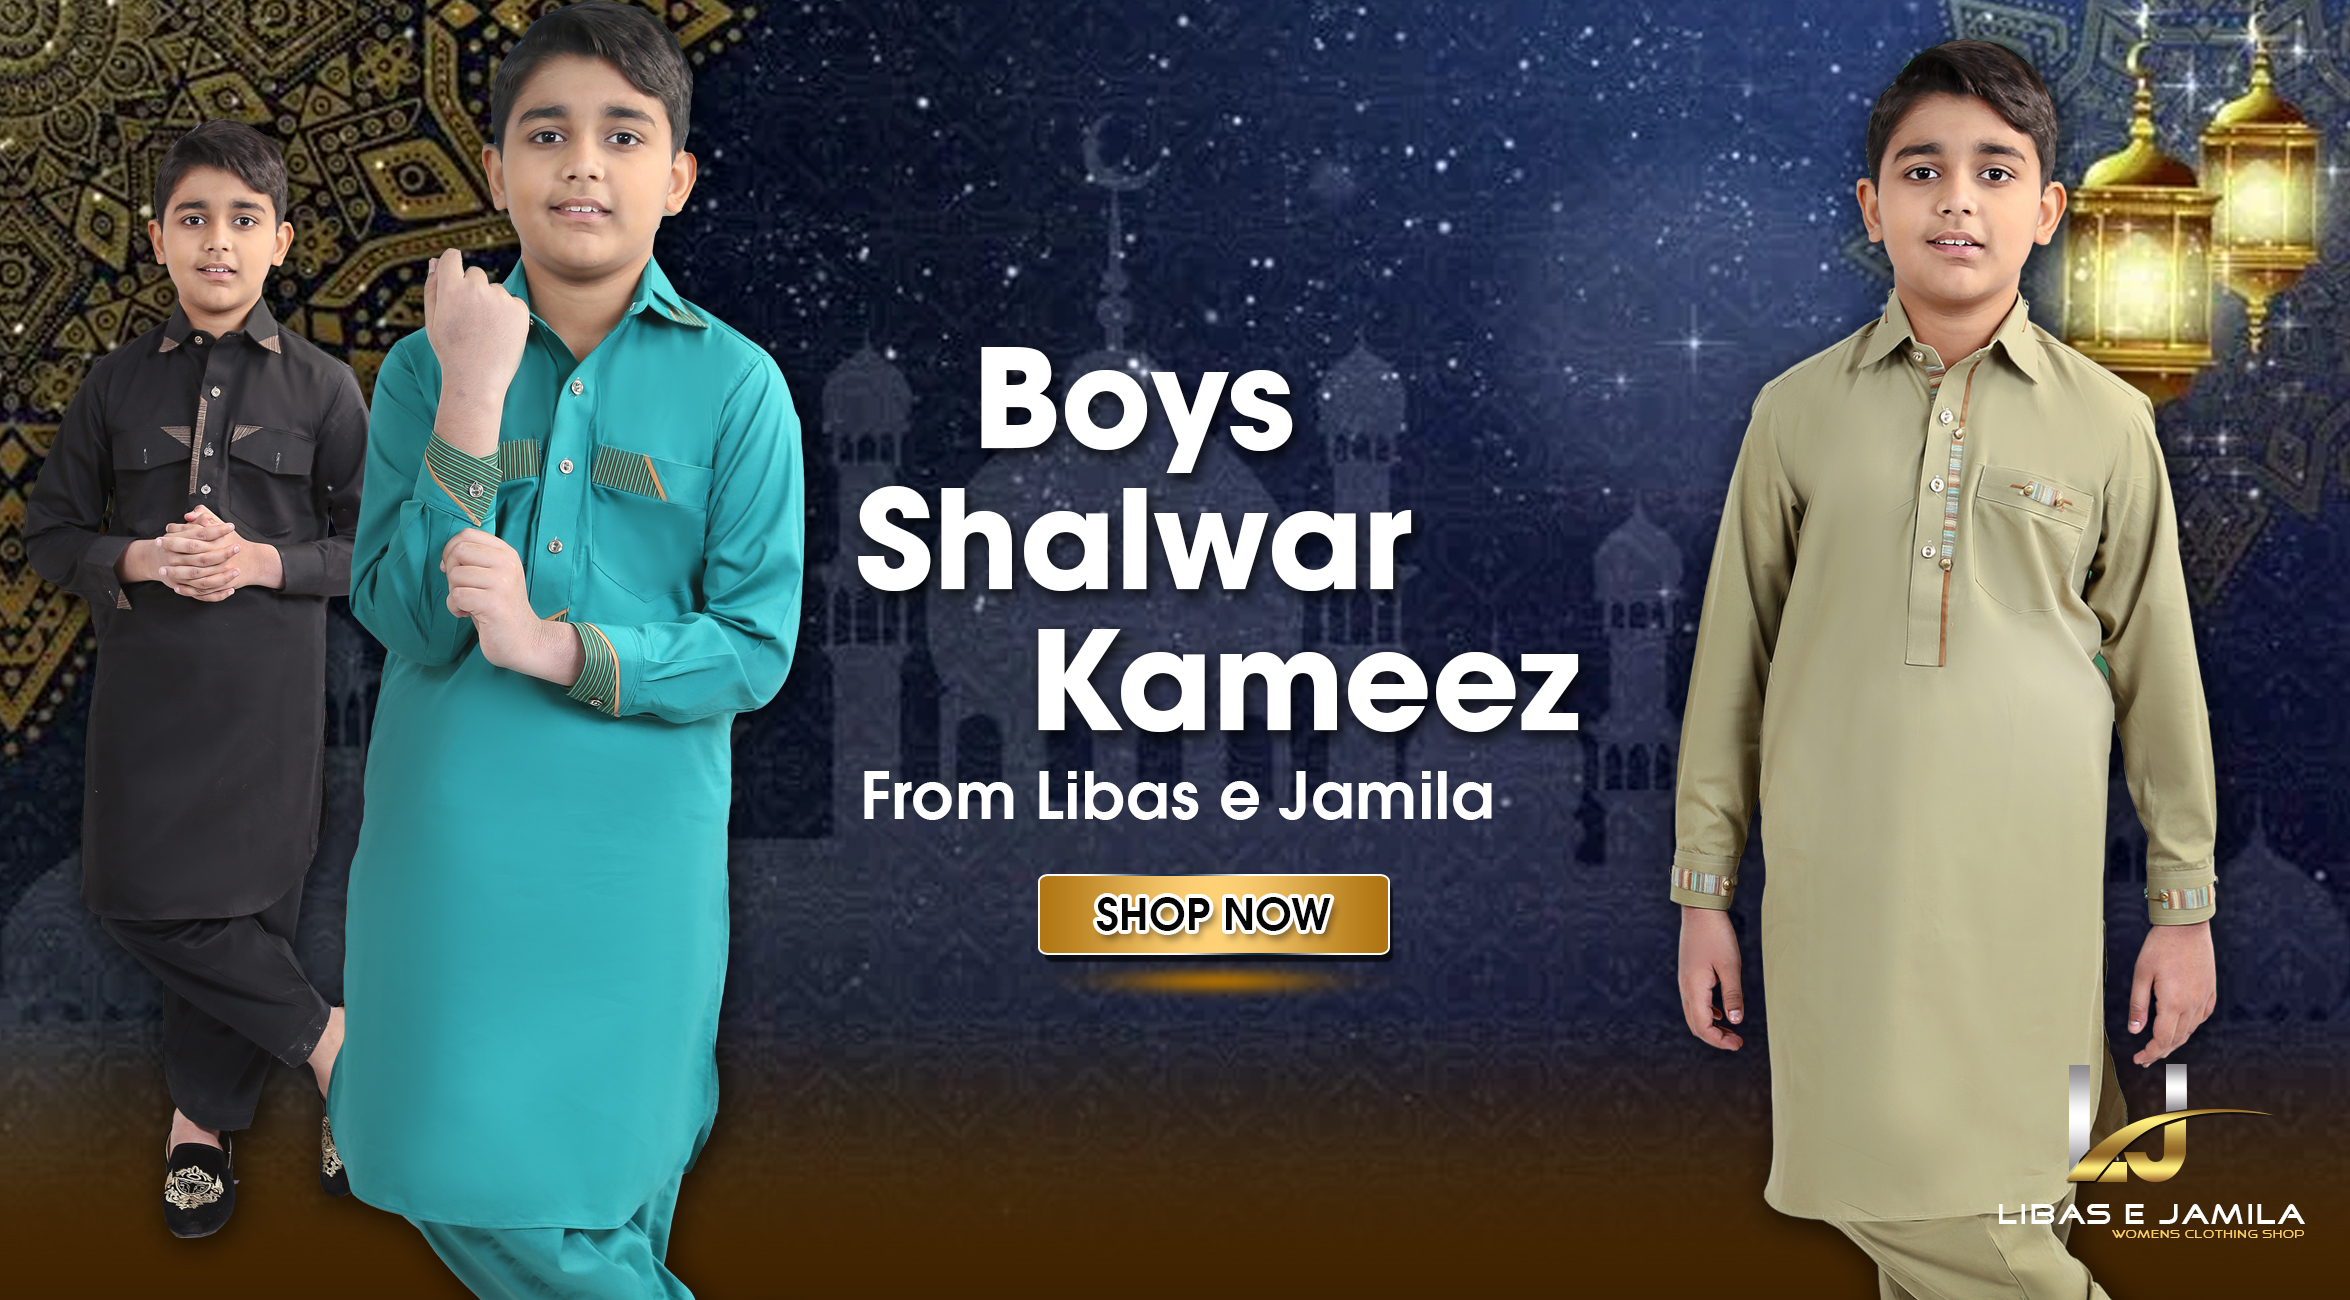 Boys-shalwar-kameez